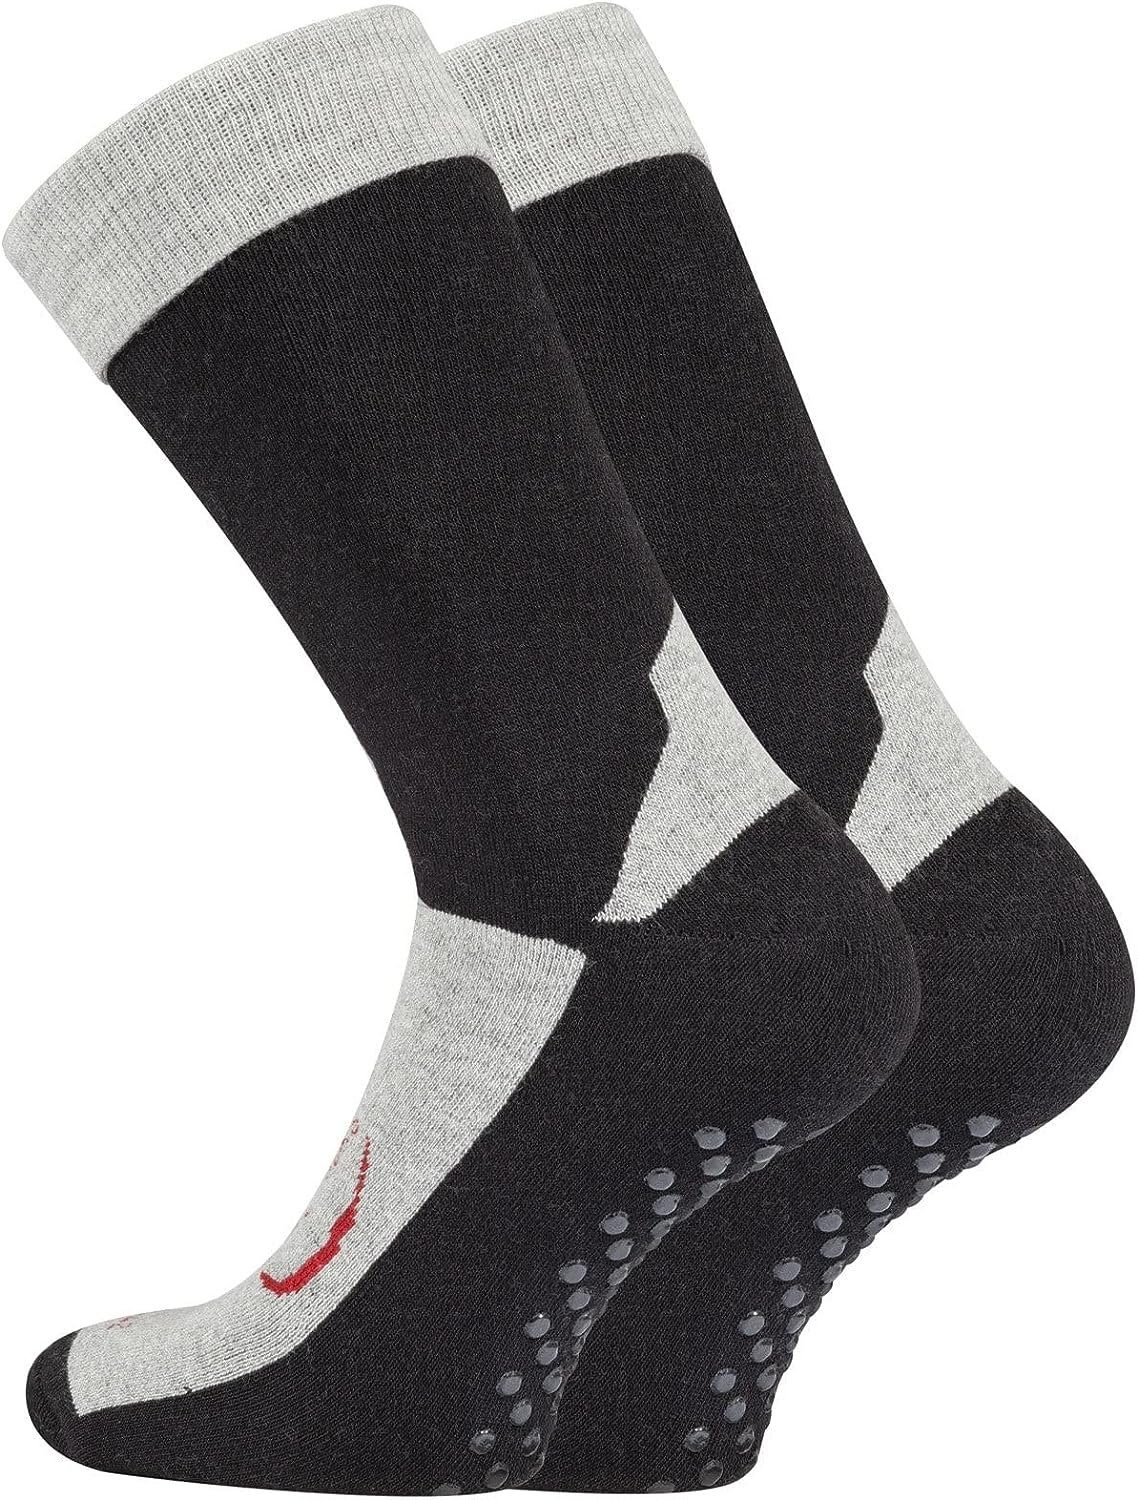 TippTexx 24 Haussocken 2 Paar ABS-Socken, Anti-Rutsch-Socken Homesocks Stopper-Socken